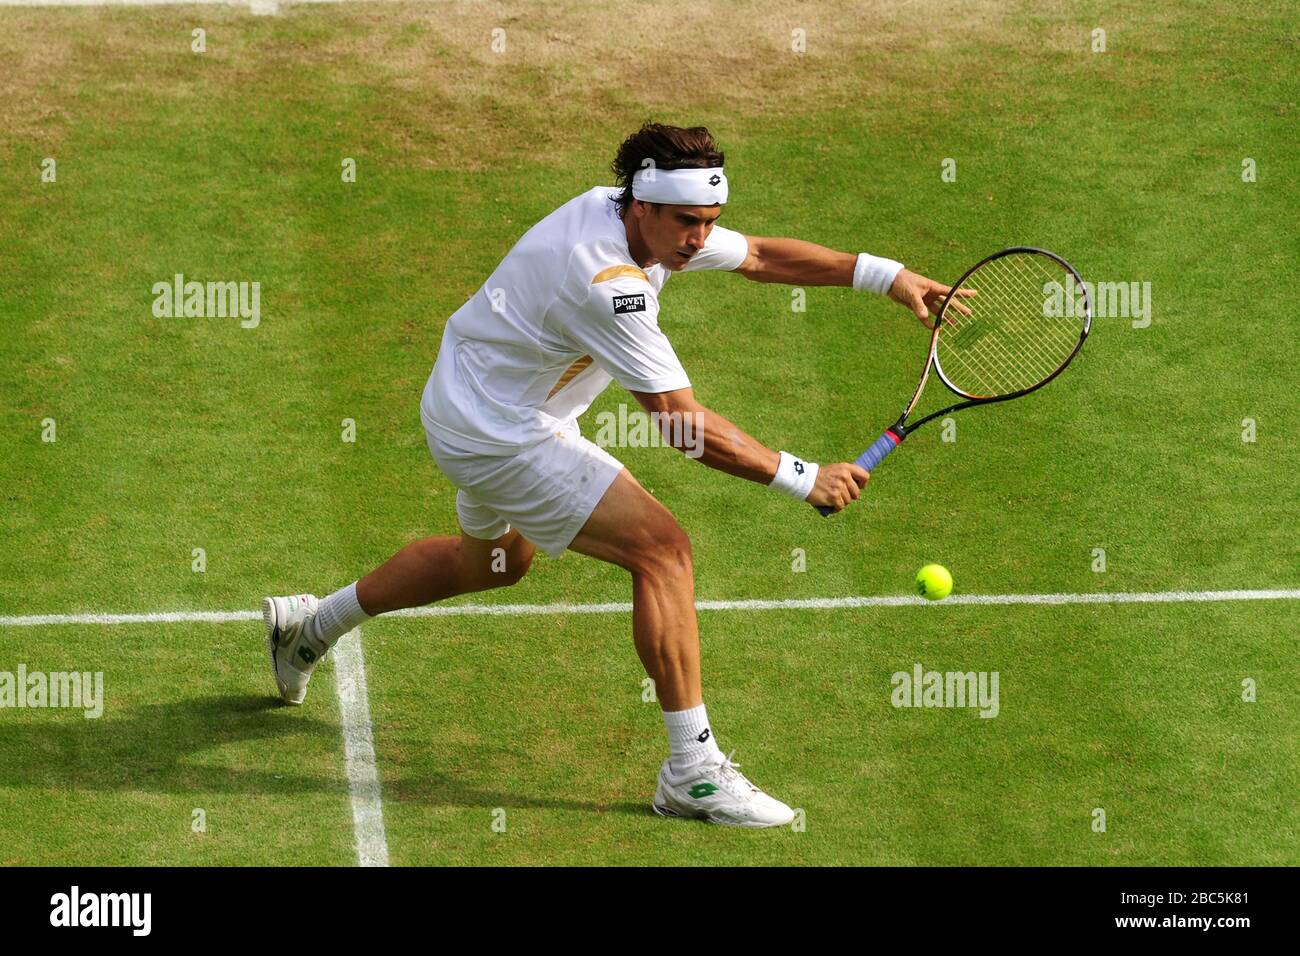 David Ferrer, en Espagne, est en action contre Andy Murray, en Grande-Bretagne Banque D'Images